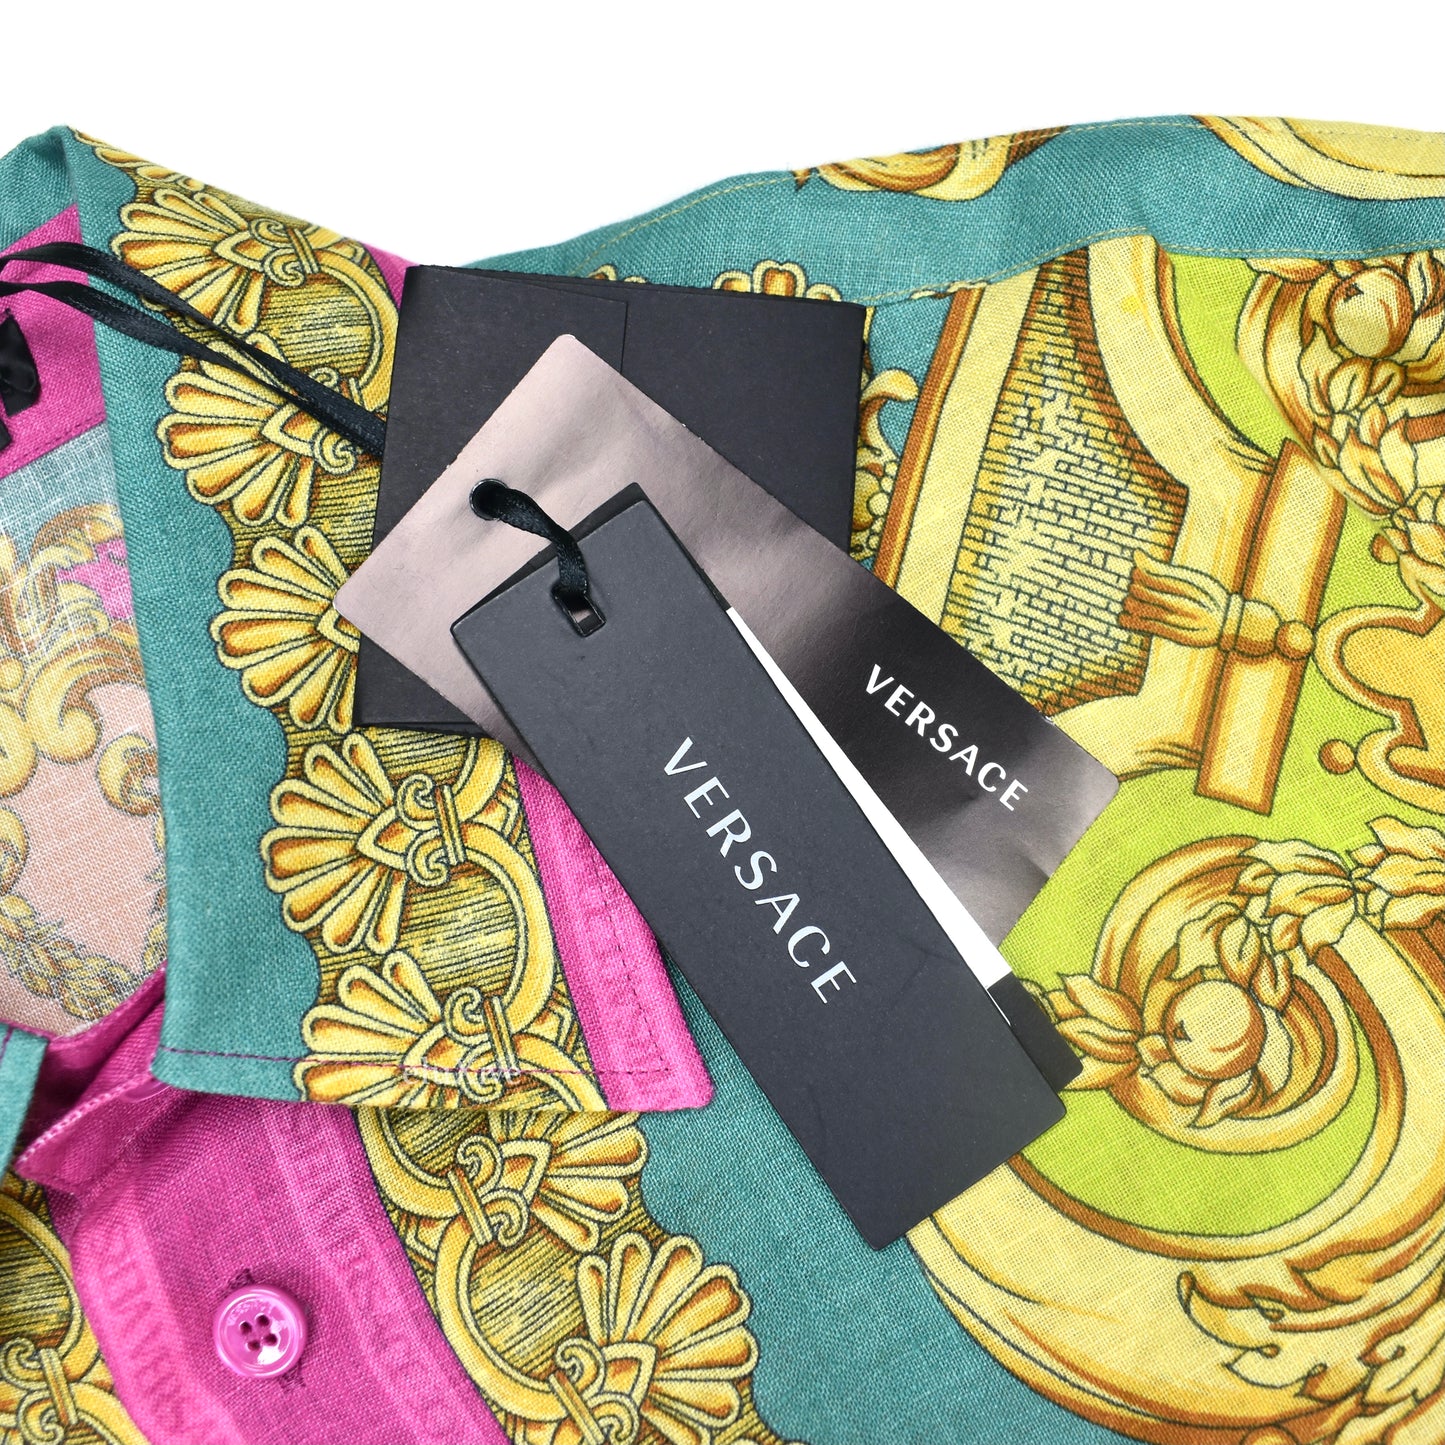 Versace - Barocco Print Linen Shirt